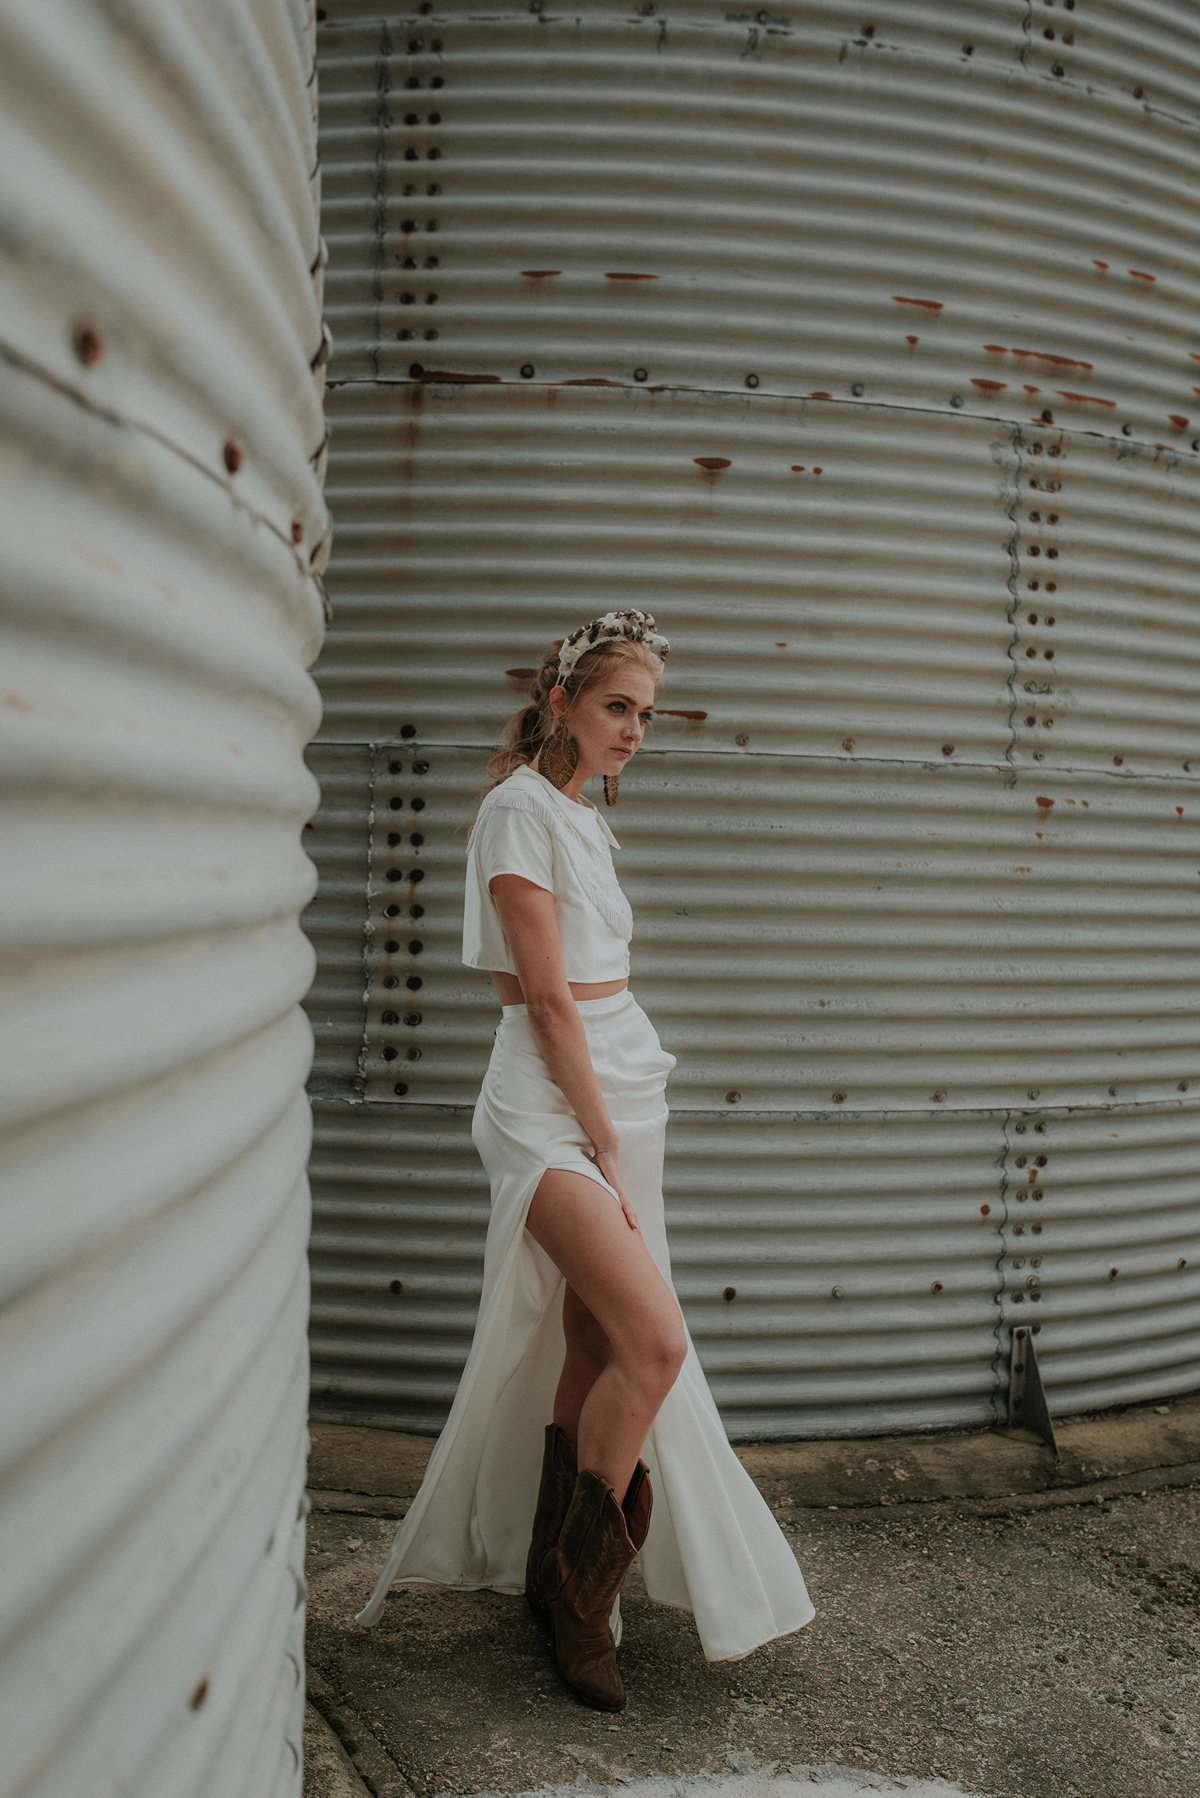  Cowgirl Bride - The Cowgirl Bride: Free Spirited, Bohemian, Wedding Day Styling